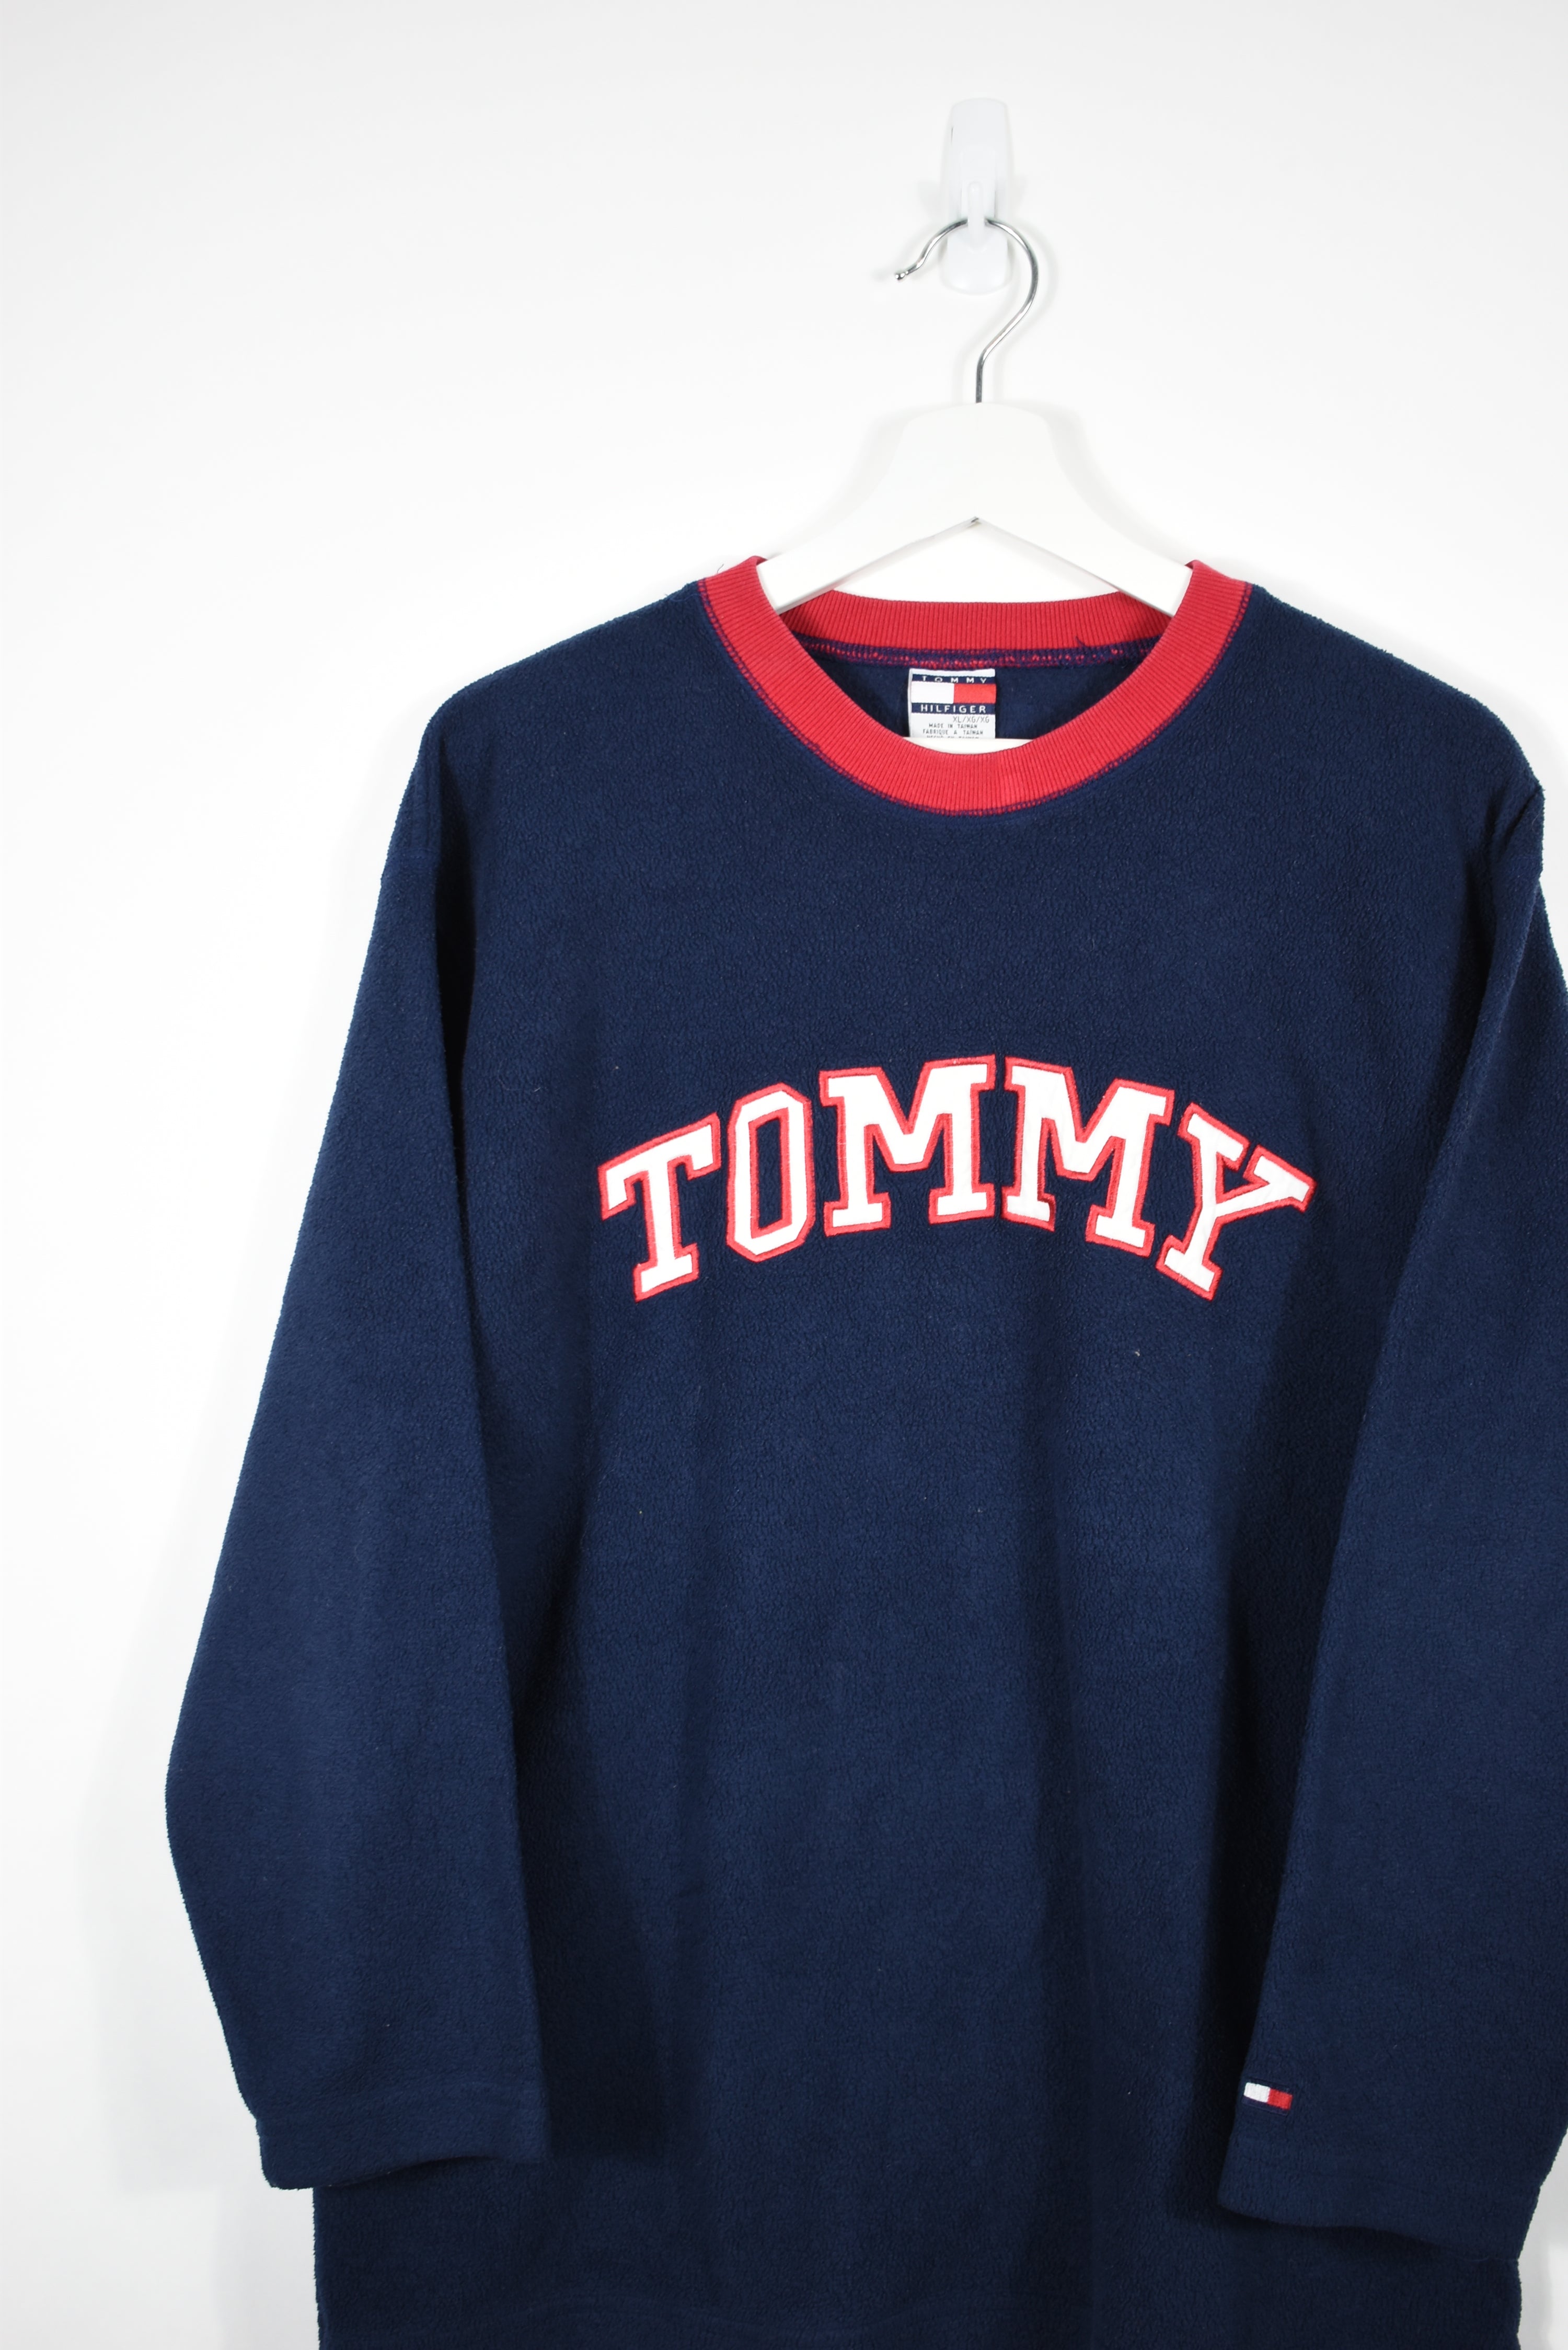 Vintage Tommy Hilfiger Embroidery Fleece Sweatshirt LARGE (Baggy)